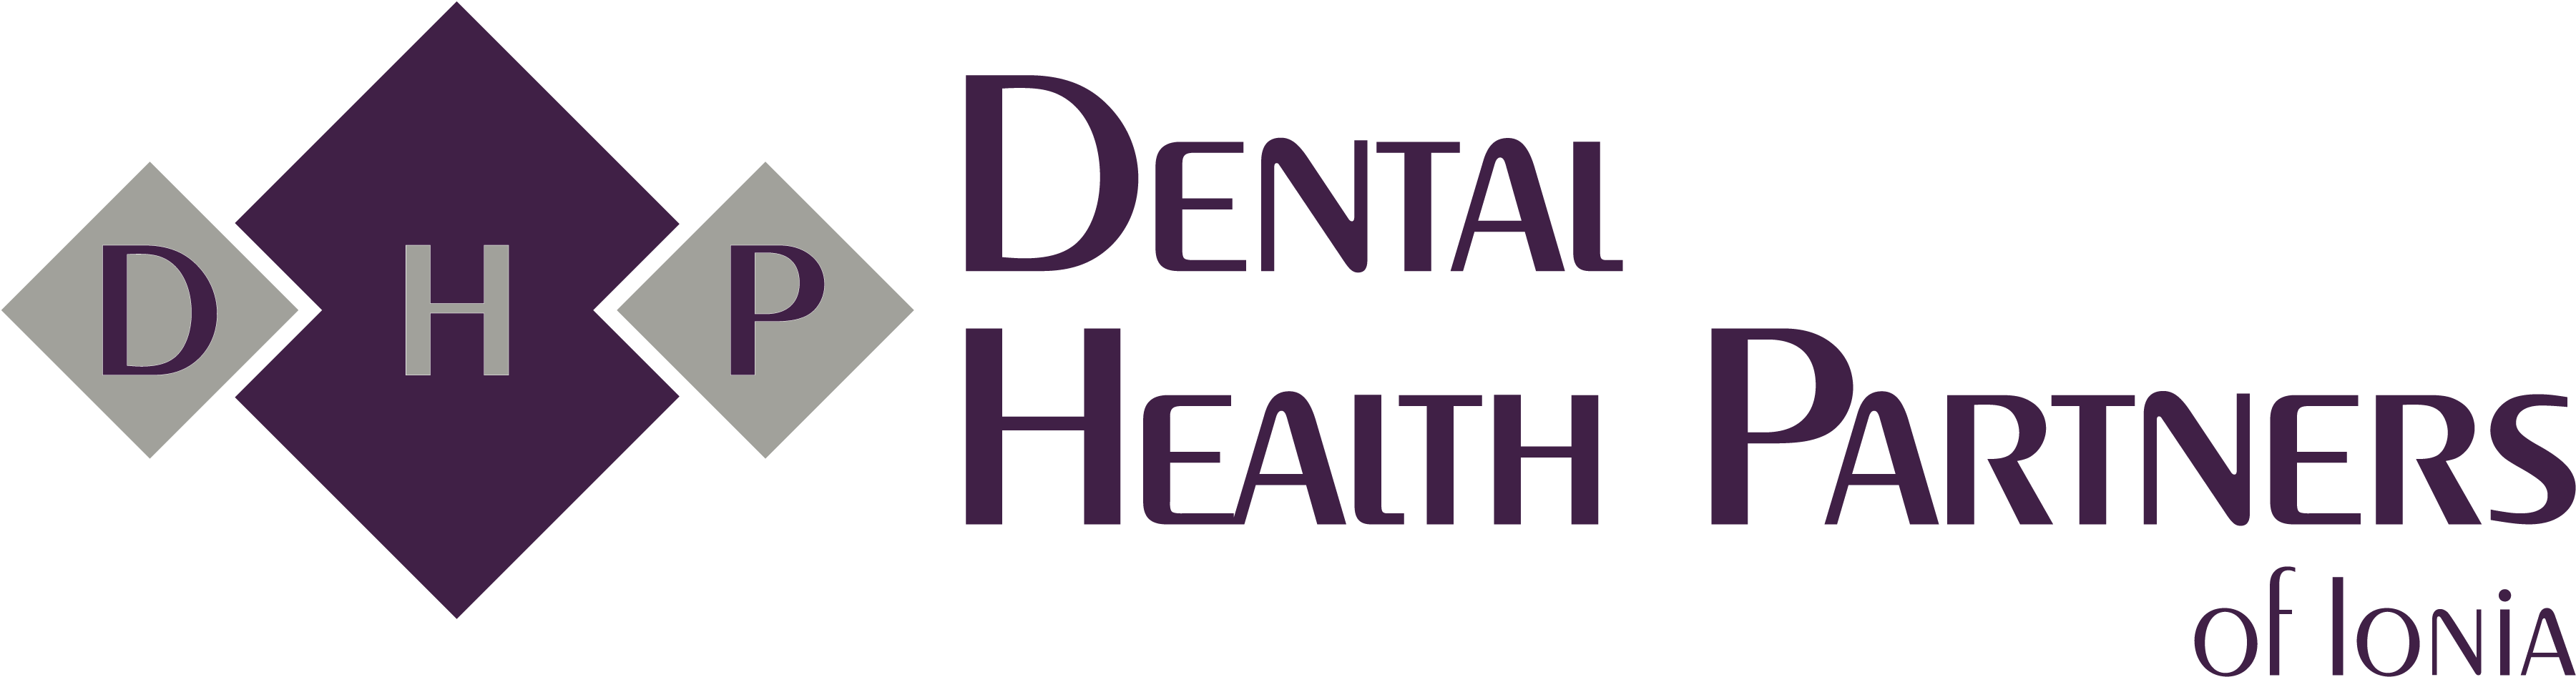 Dental Health Partners of Ionia